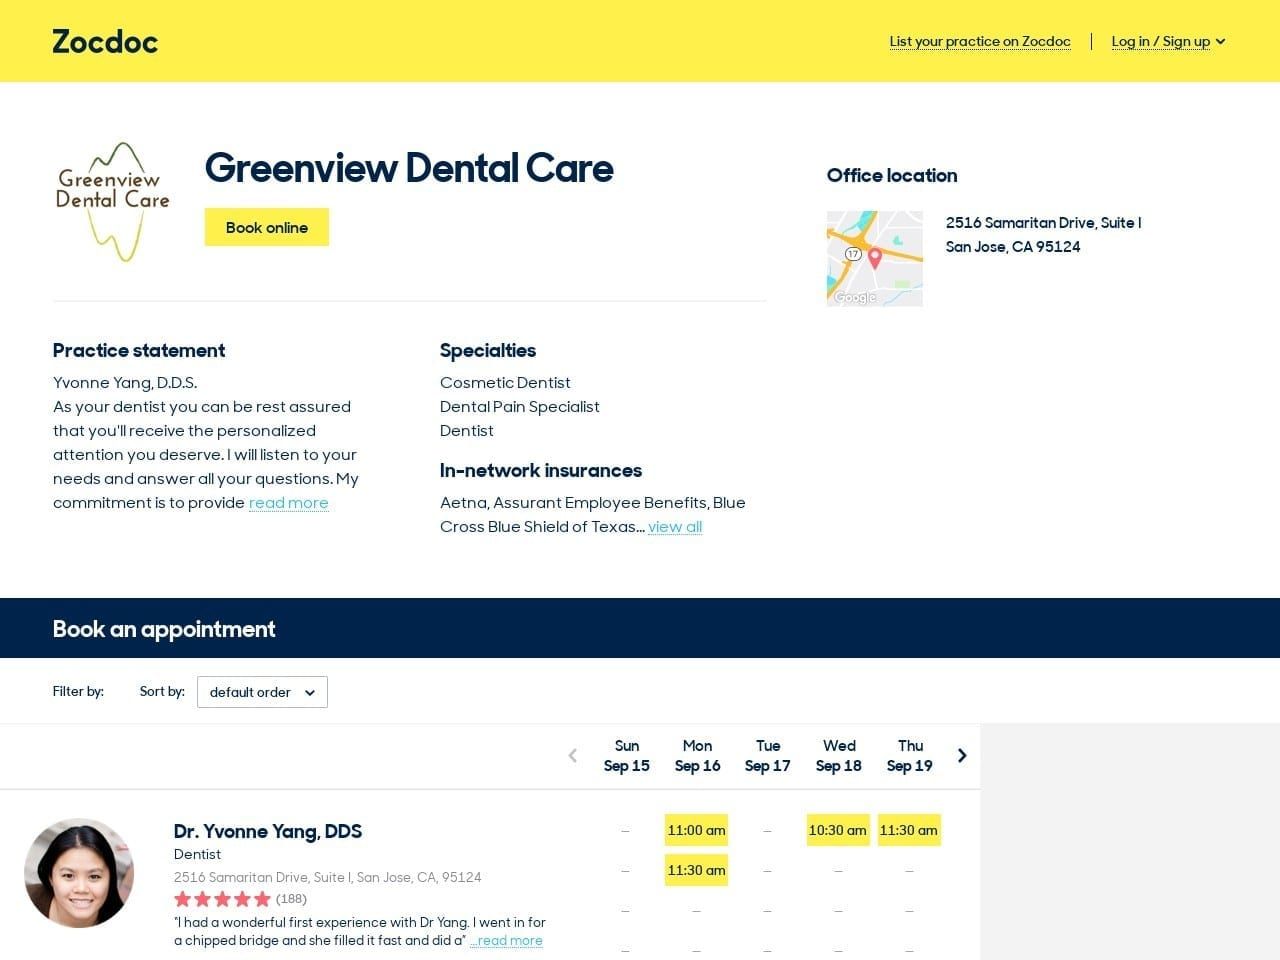 Greenview Dental Care Website Screenshot from greenviewdentalcare.com